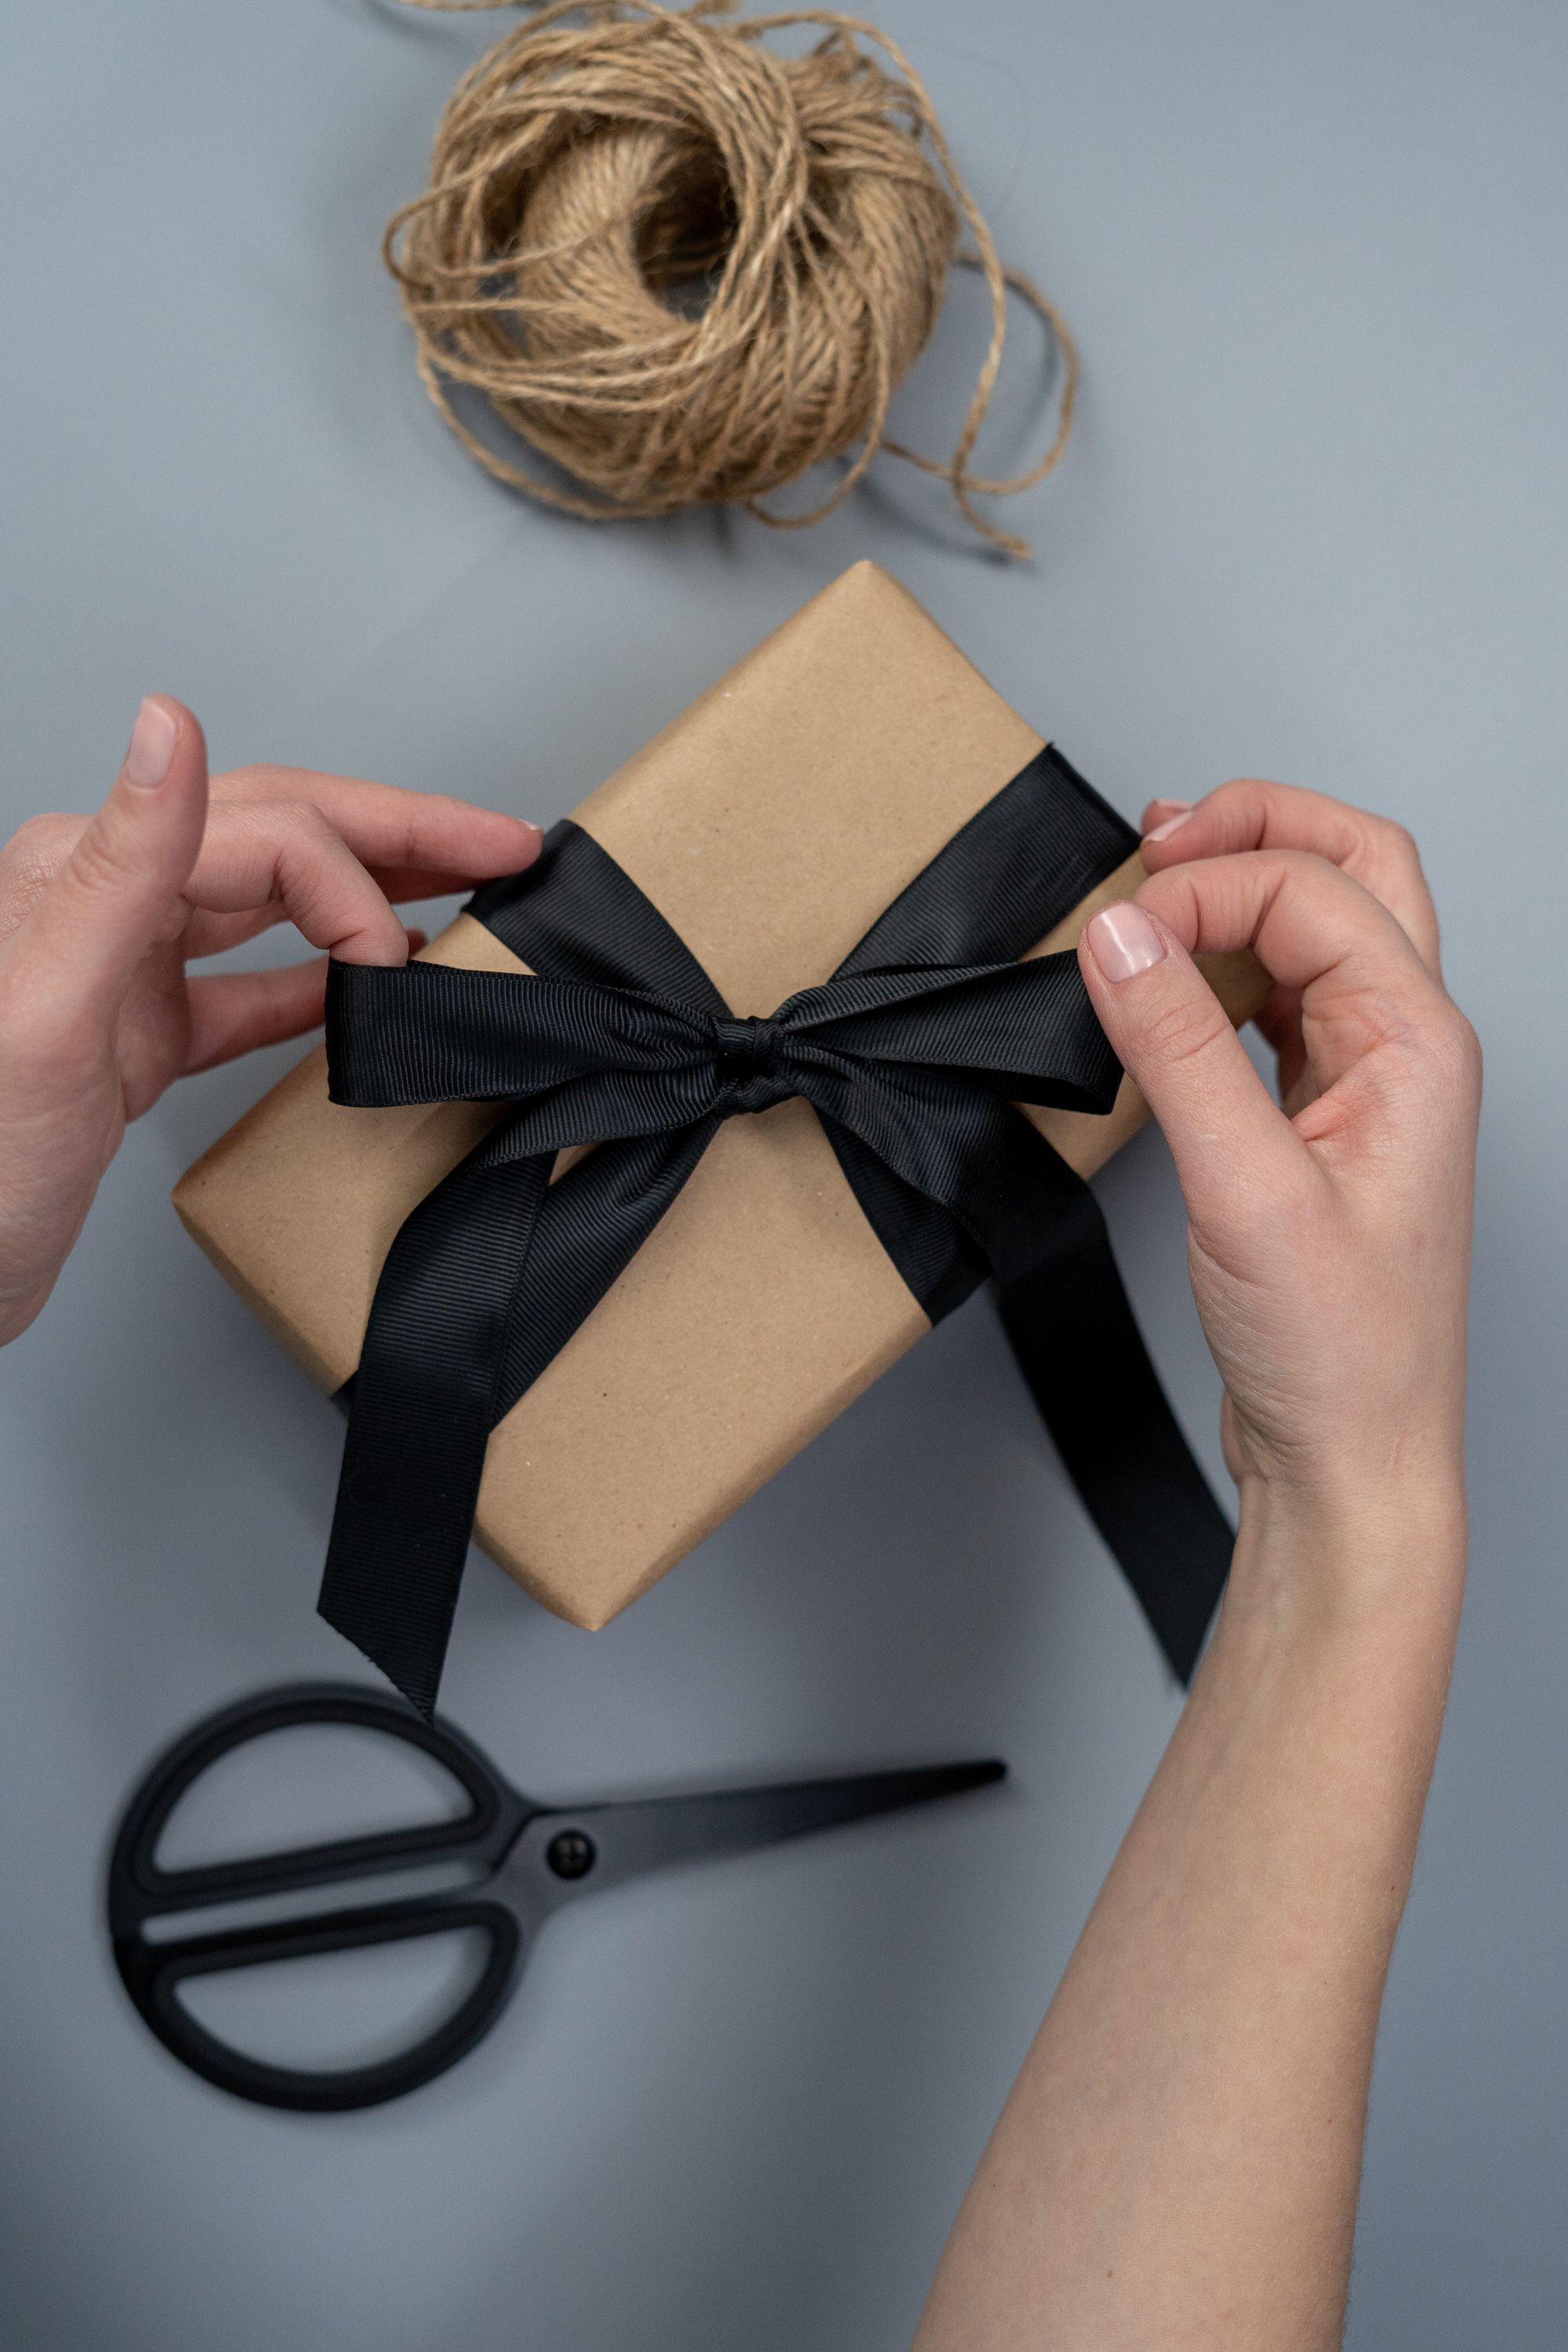 r188-brown-gift-box-with-black-ribbon-3927238-2000px.jpg